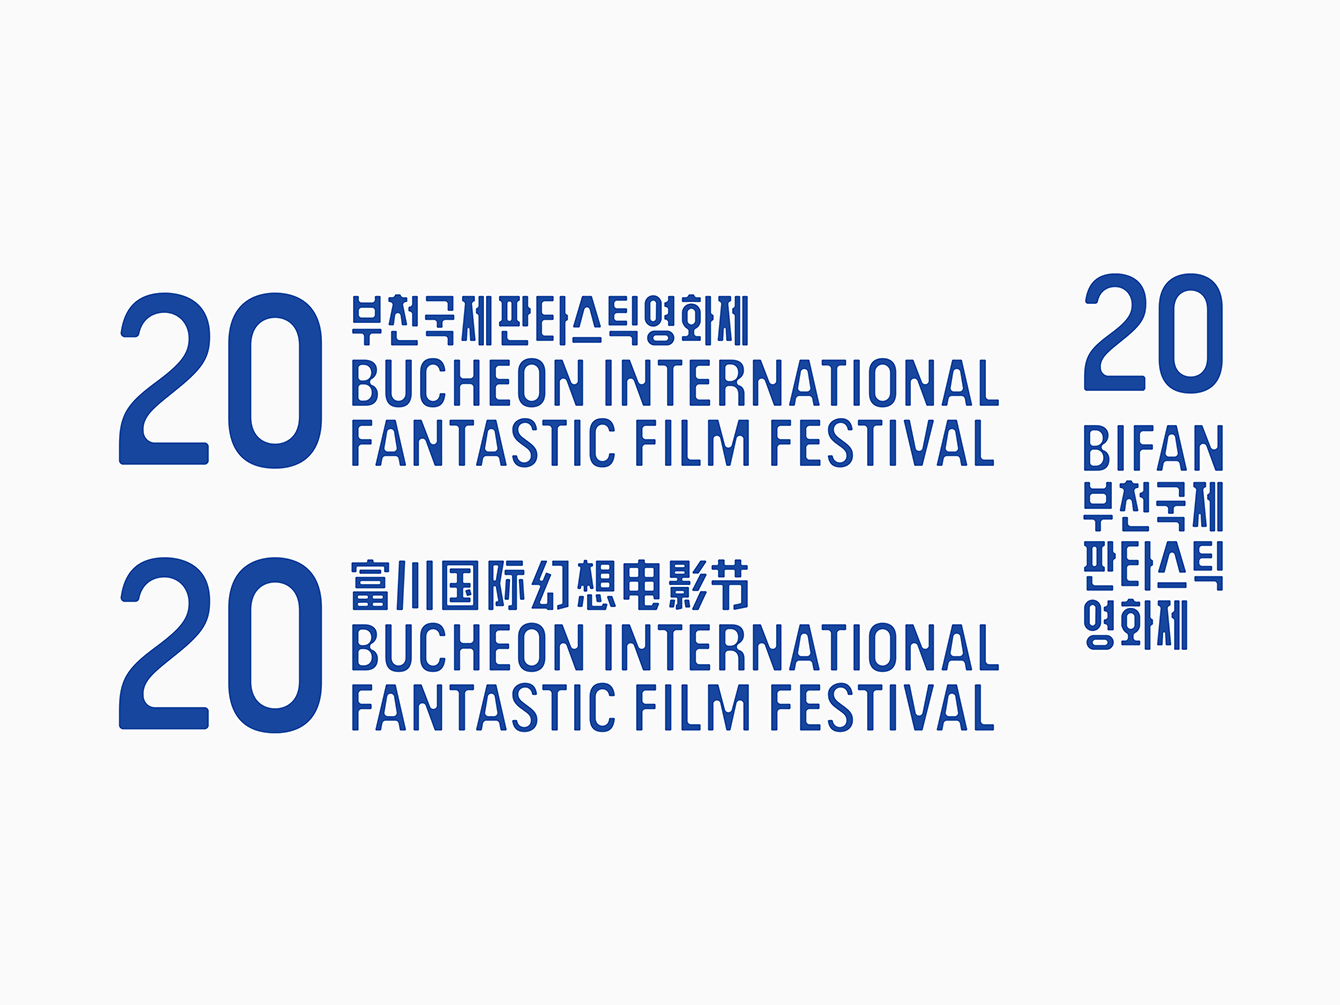 Custom font by Studio fnt for 20th Bucheon International Fantastic Film Festival, South Korea